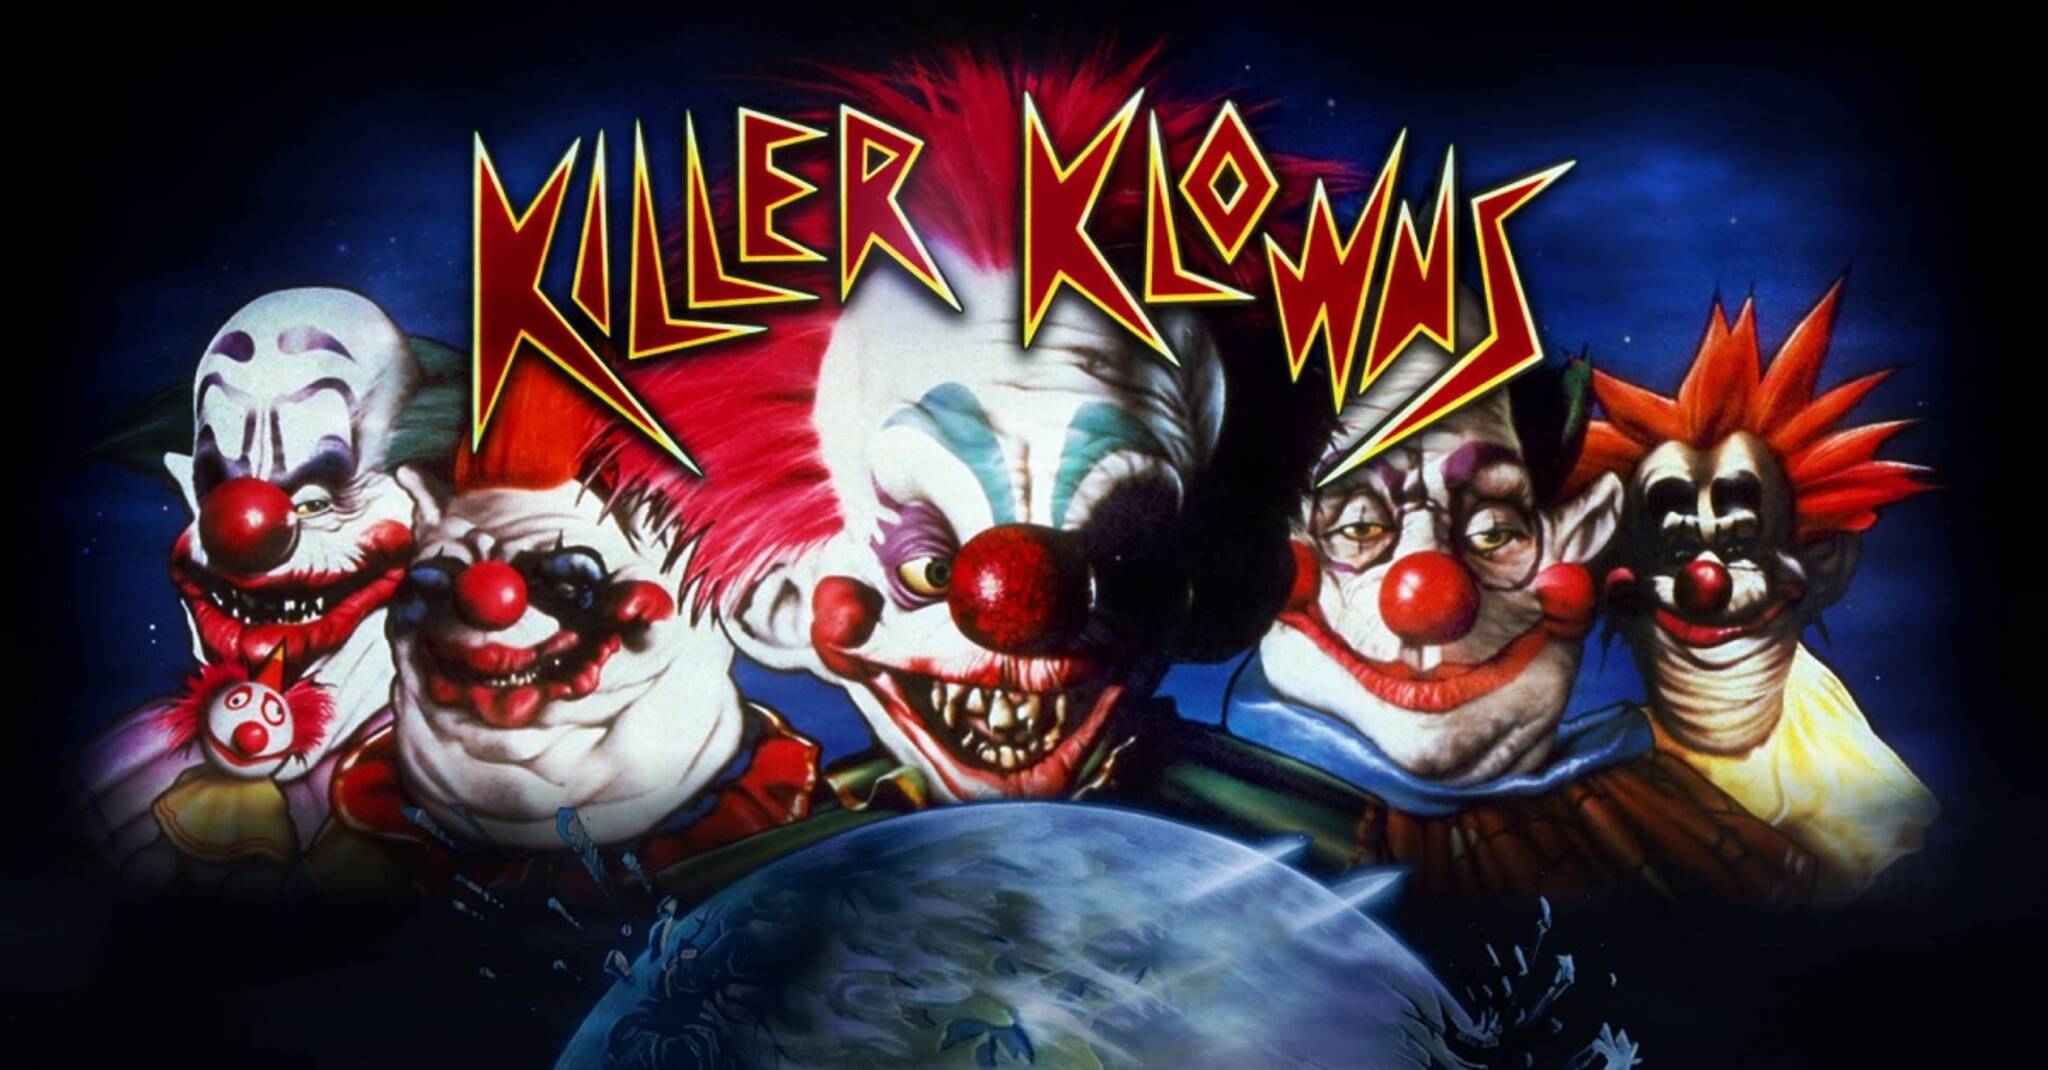 Killer klowns john massari. Клоуны-убийцы из космоса 1988. Killer Klowns from Outer Space 1988.